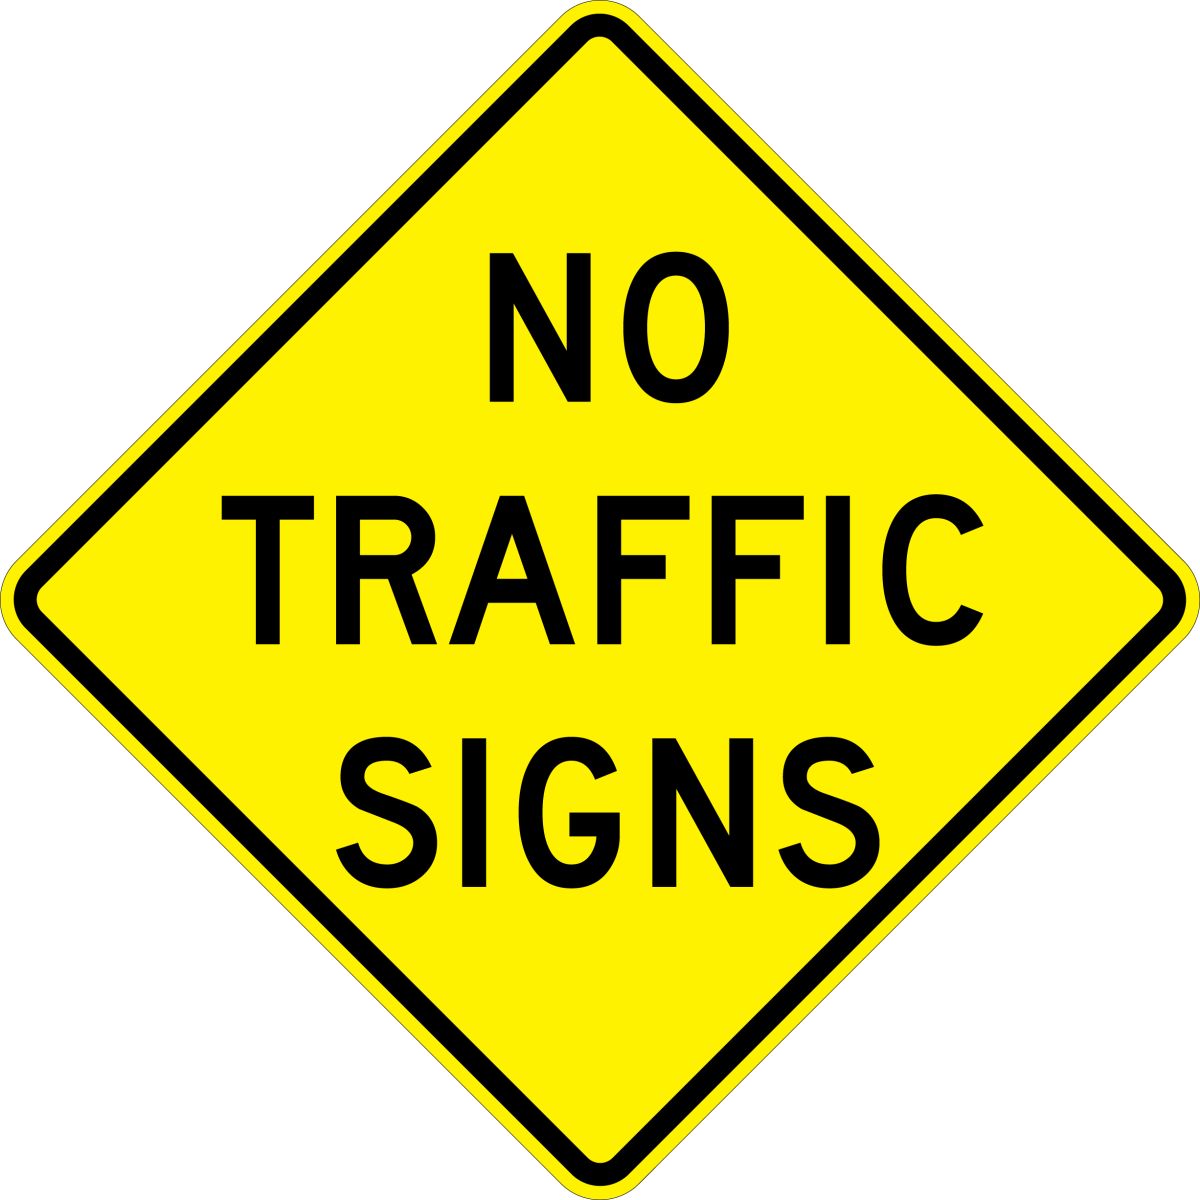 NO TRAFFIC SIGNS